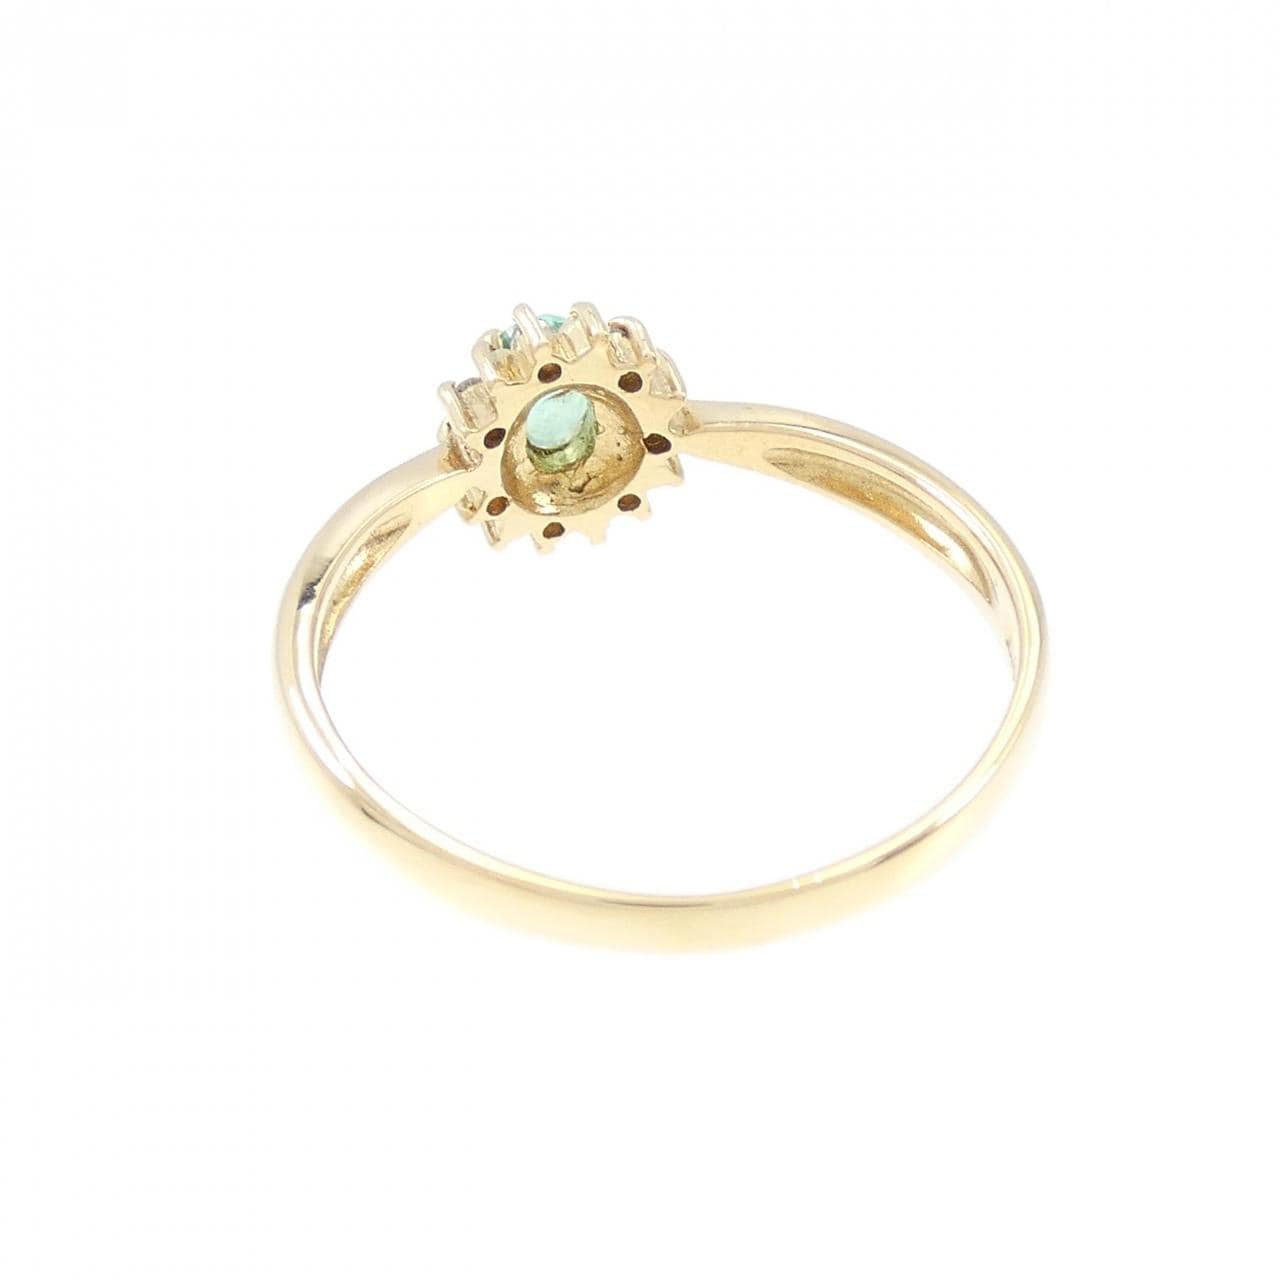 K18YG emerald ring